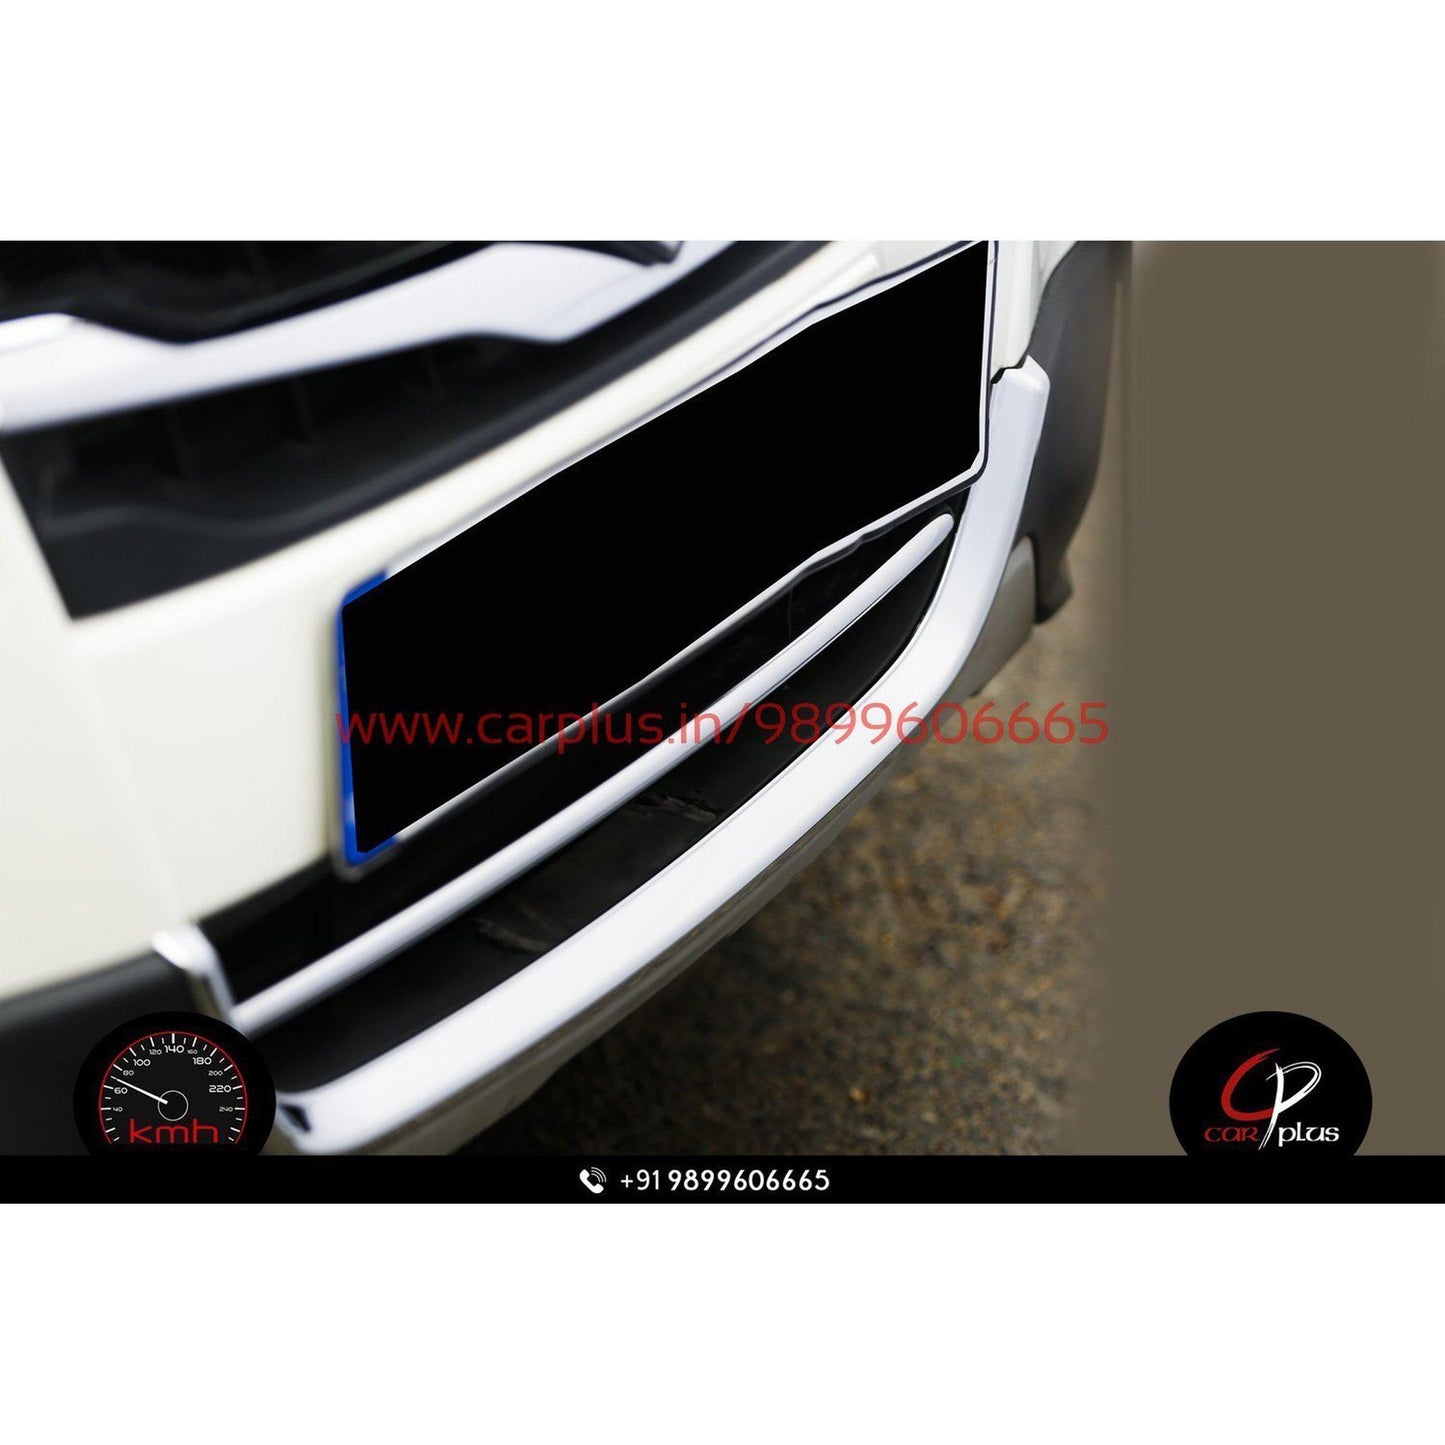 
                  
                    KMH Front Bumper Grill Trim Chrome For Maruti Suzuki SCross (Set of 2Pcs) CN LEAGUE EXTERIOR.
                  
                